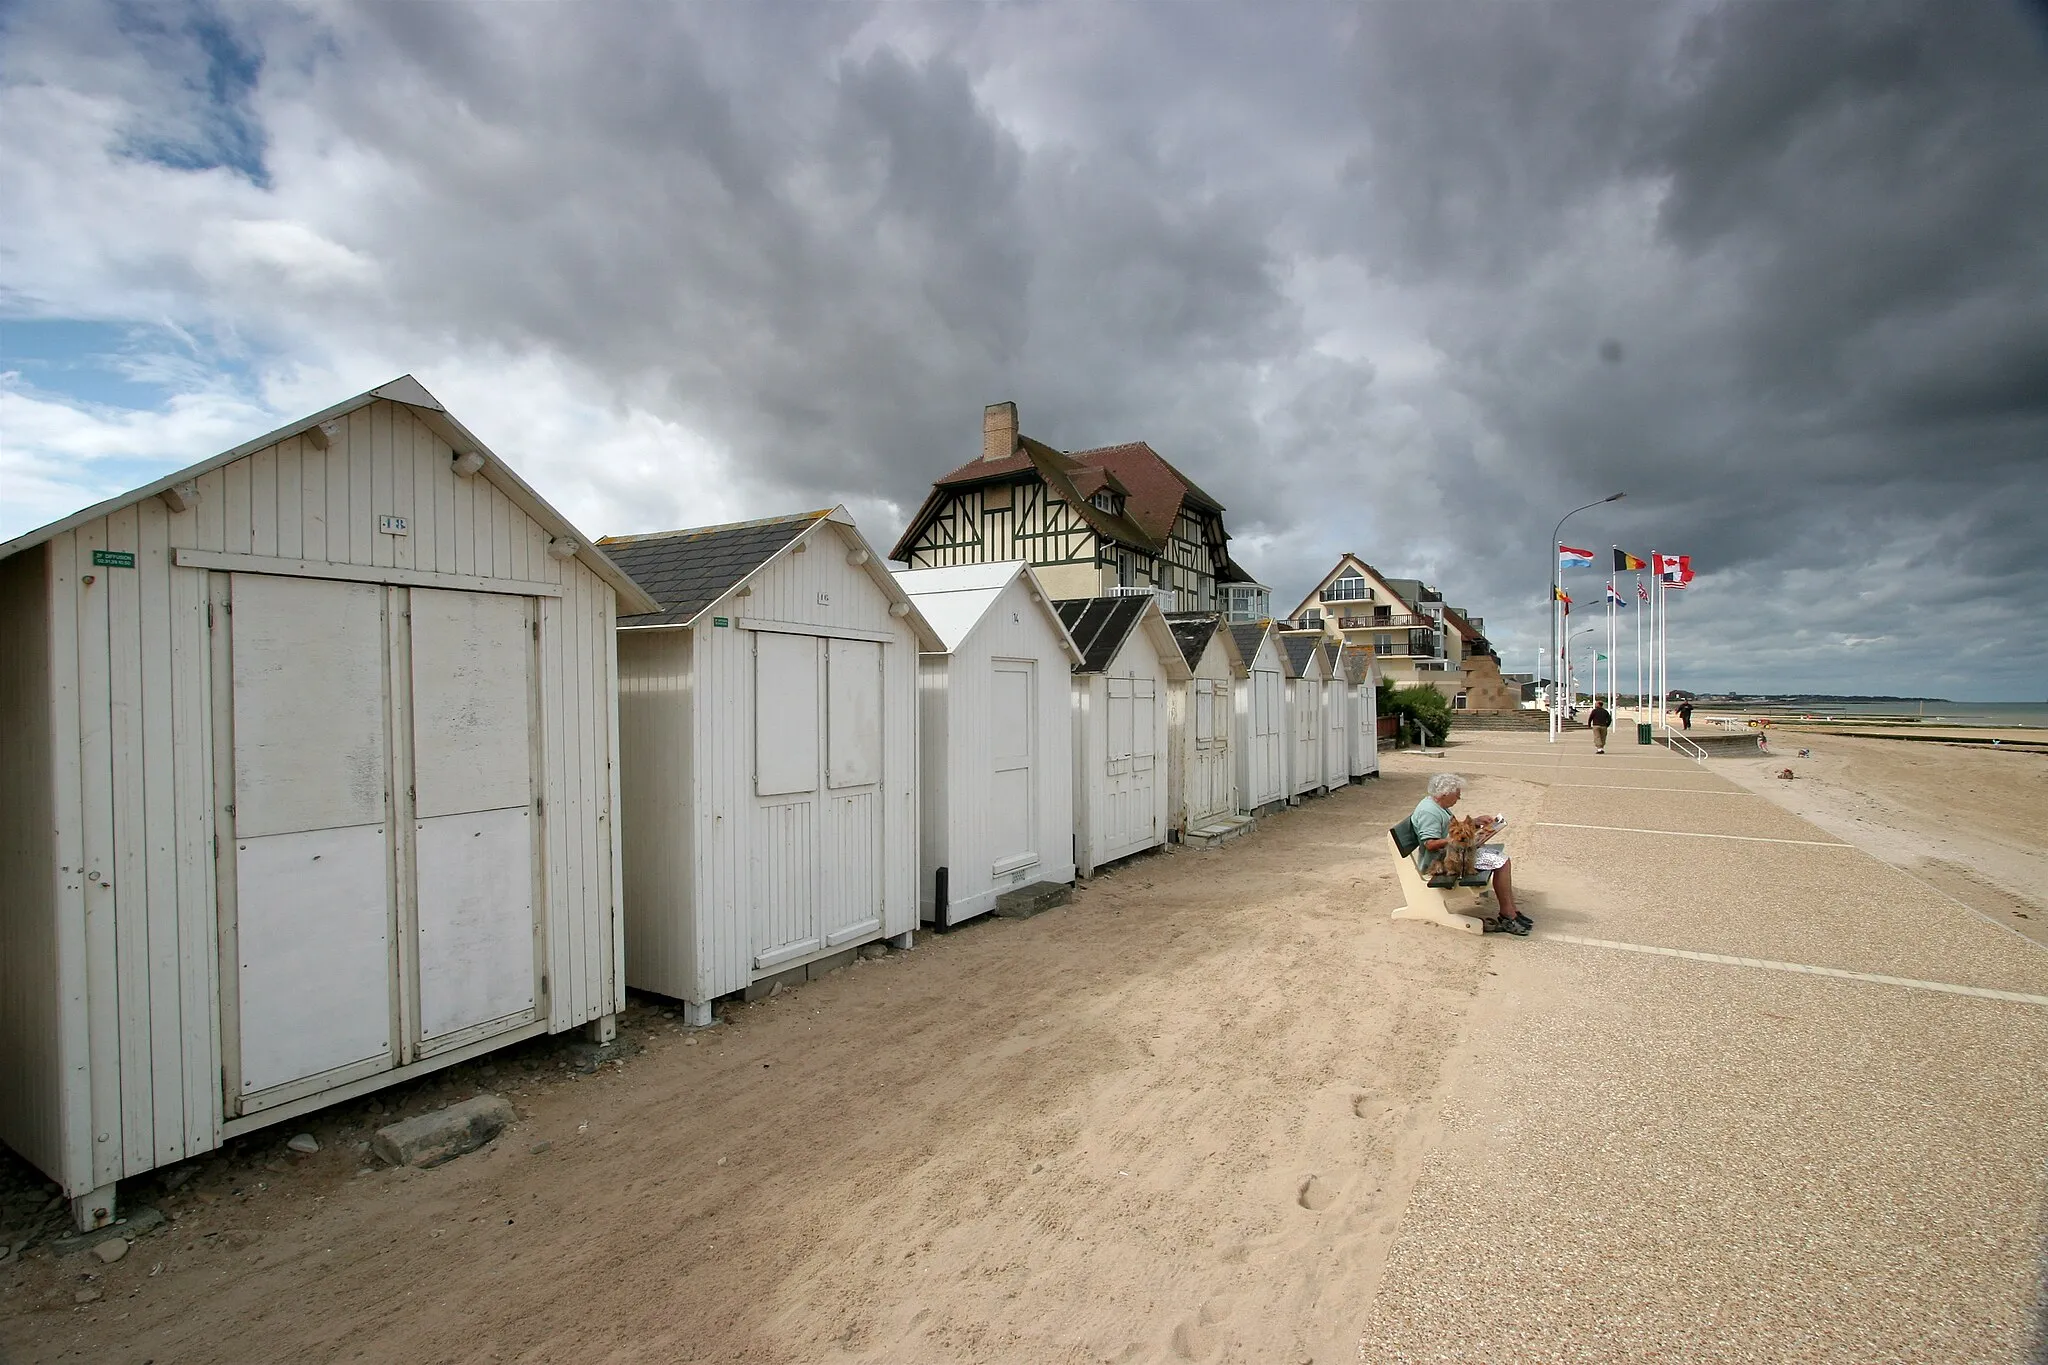 Image de Basse-Normandie